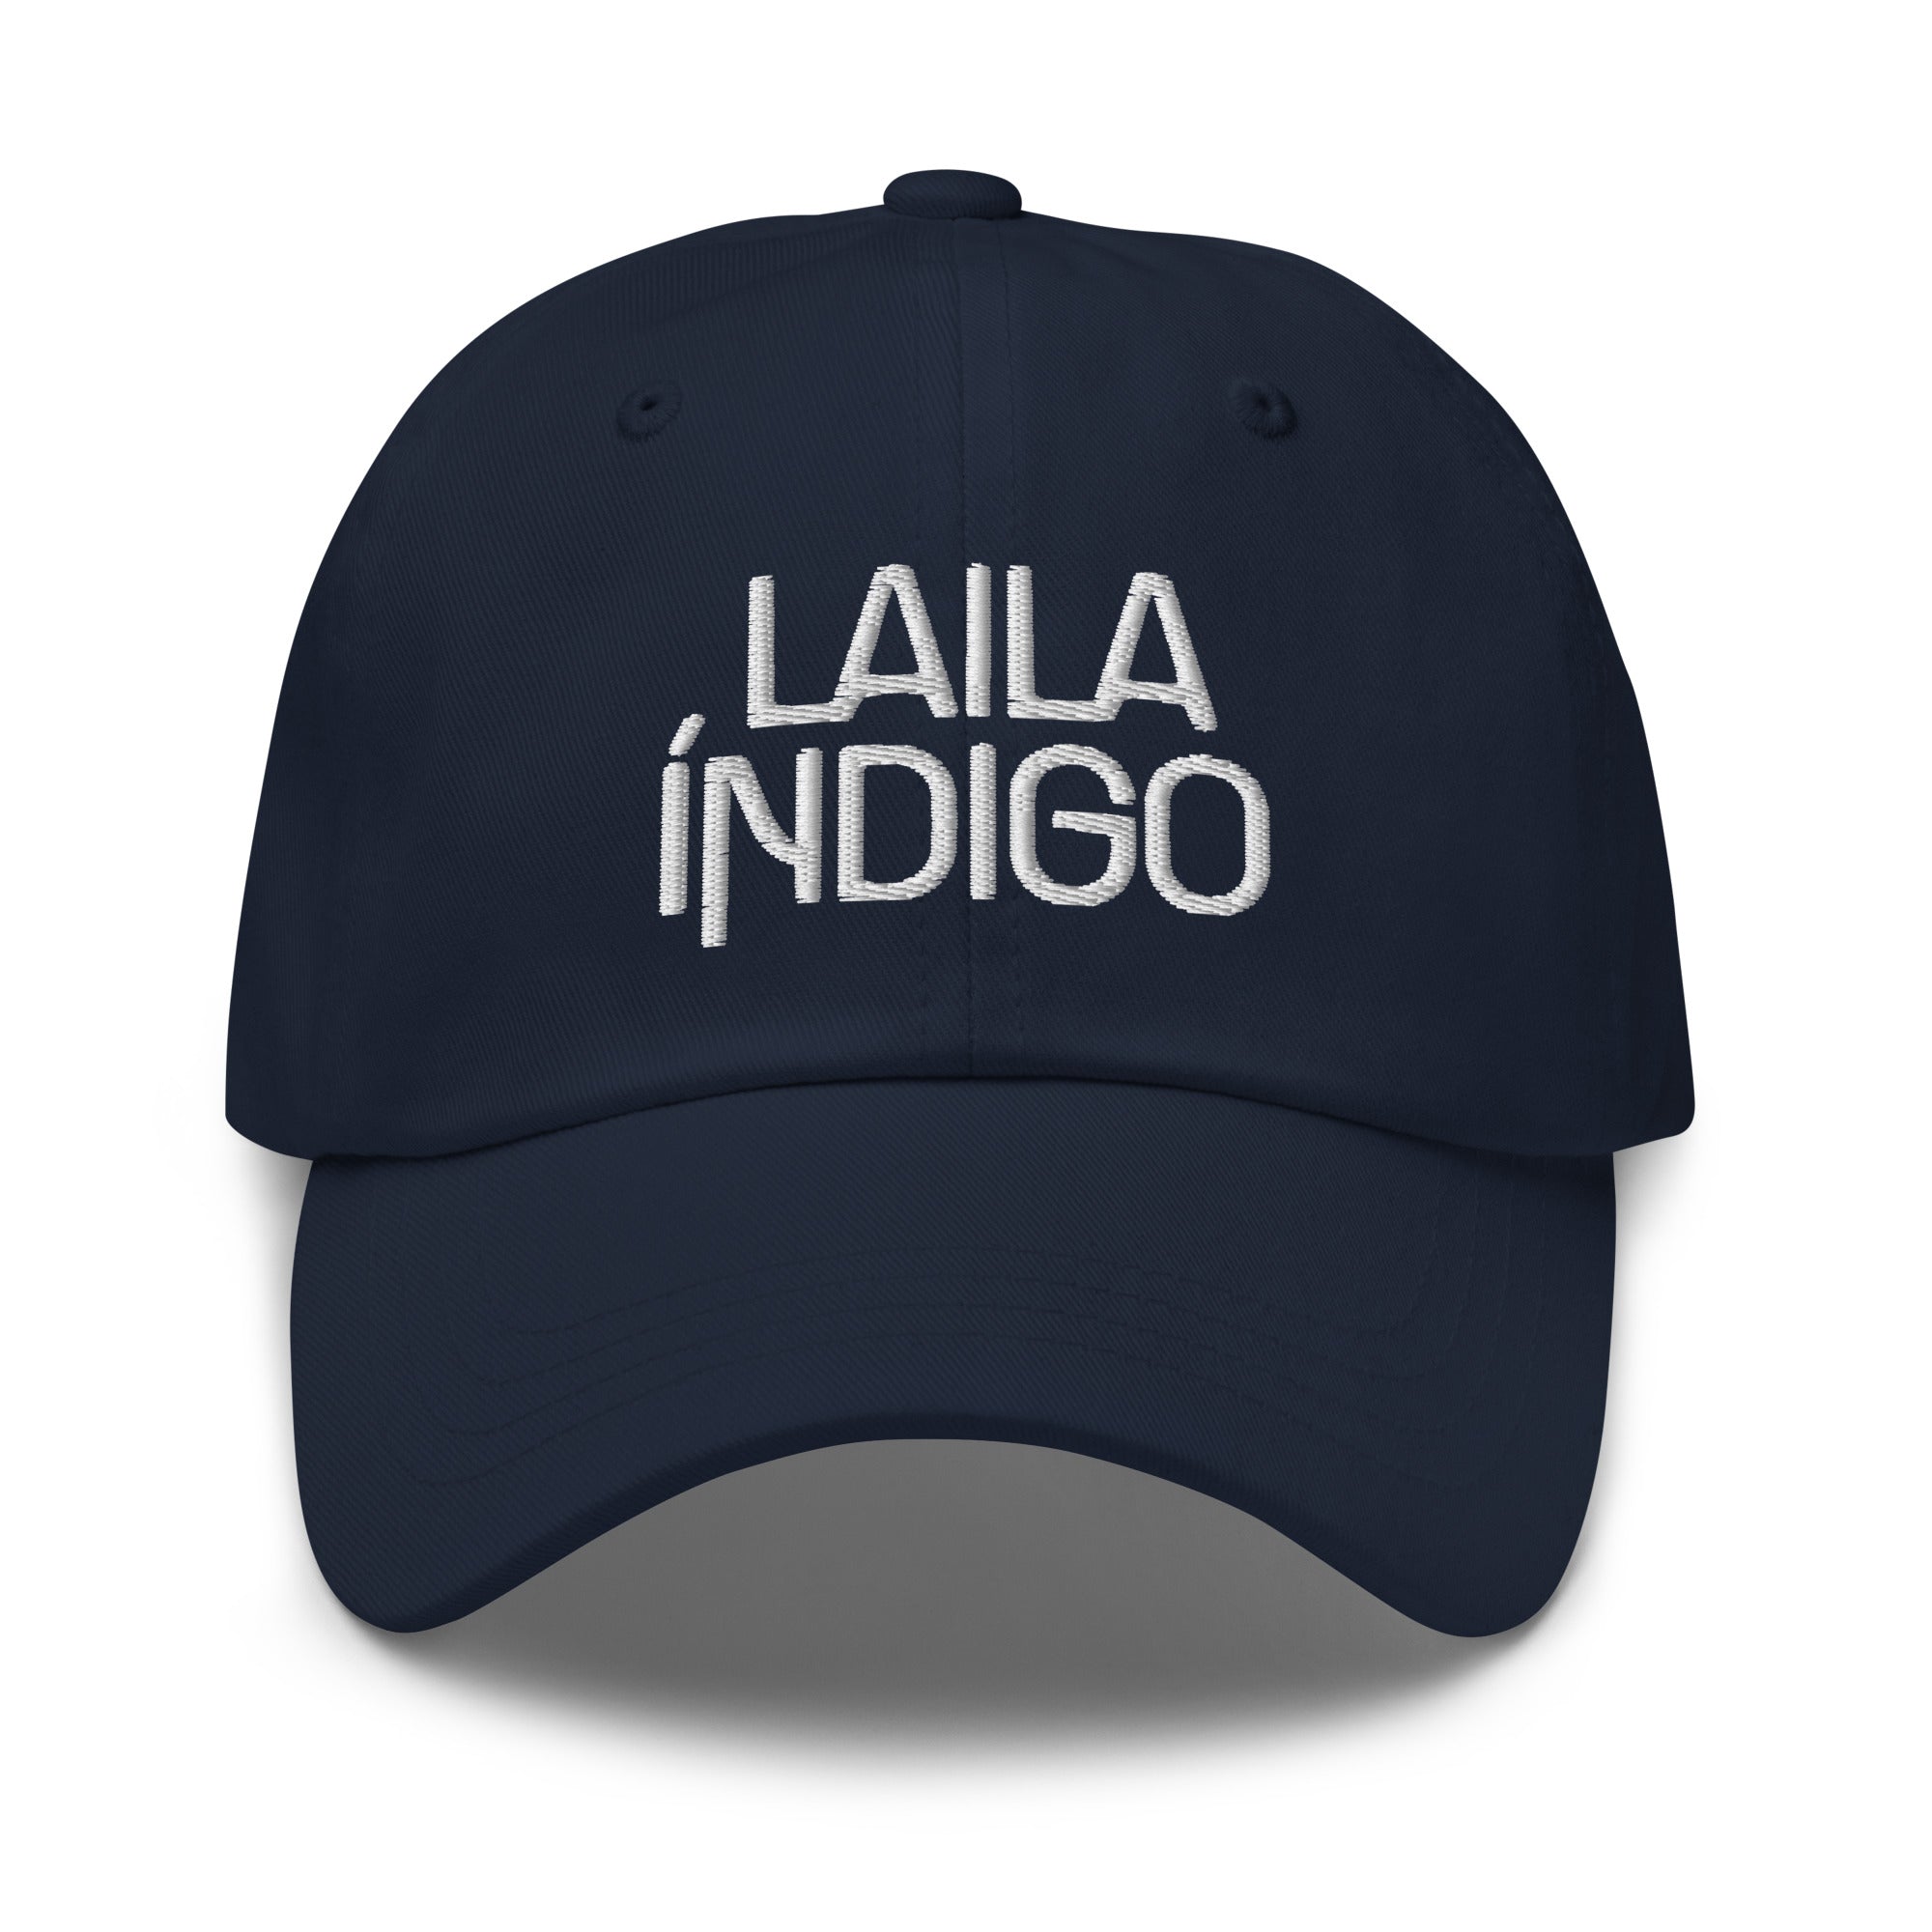 Laila Indigo - Dad hat